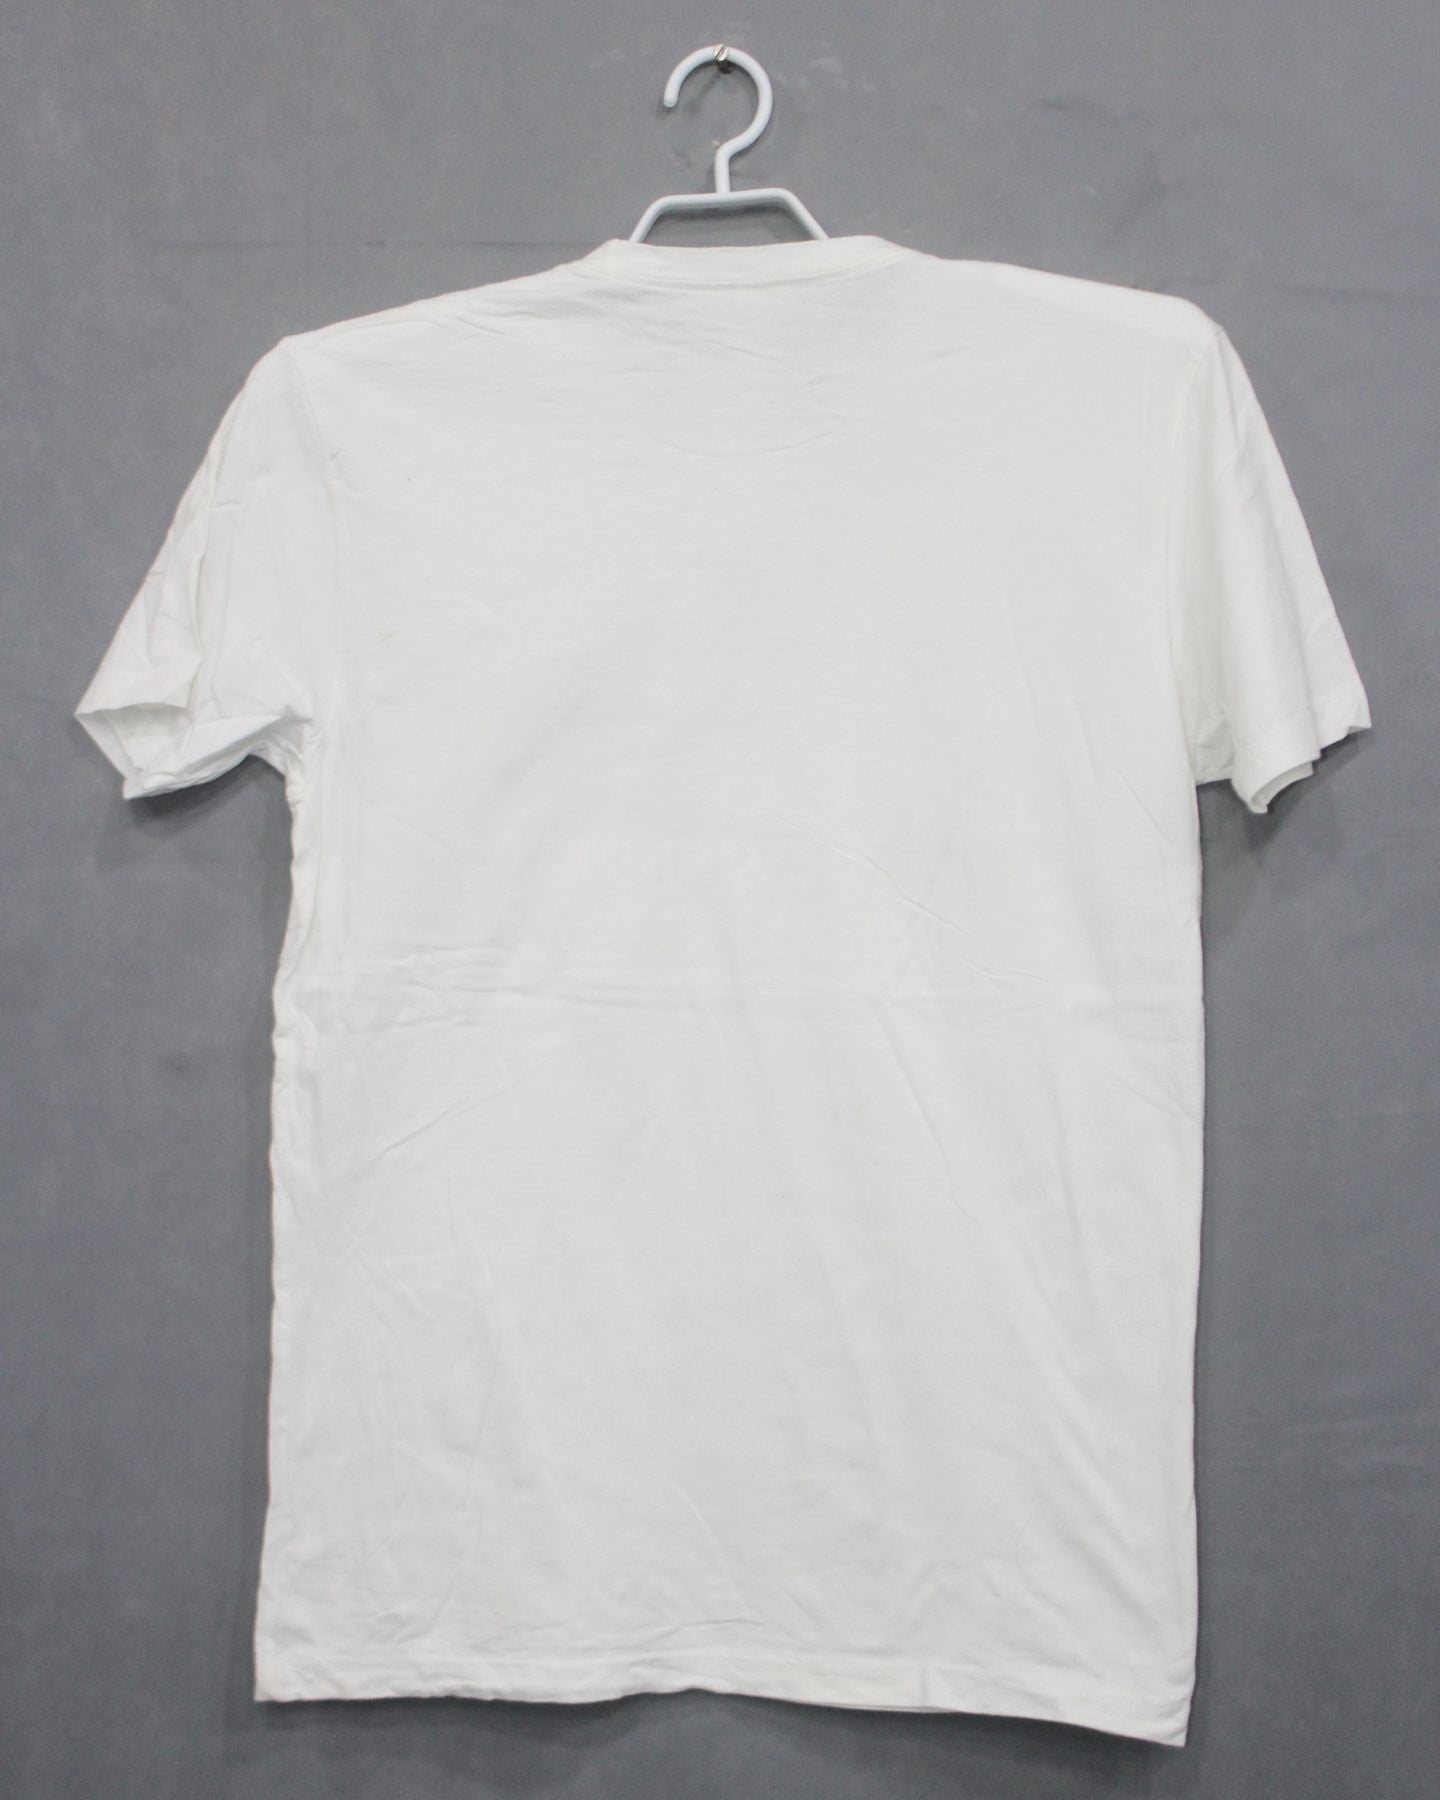 Next Level Branded Original For Cotton Round Neck Men T Shirt